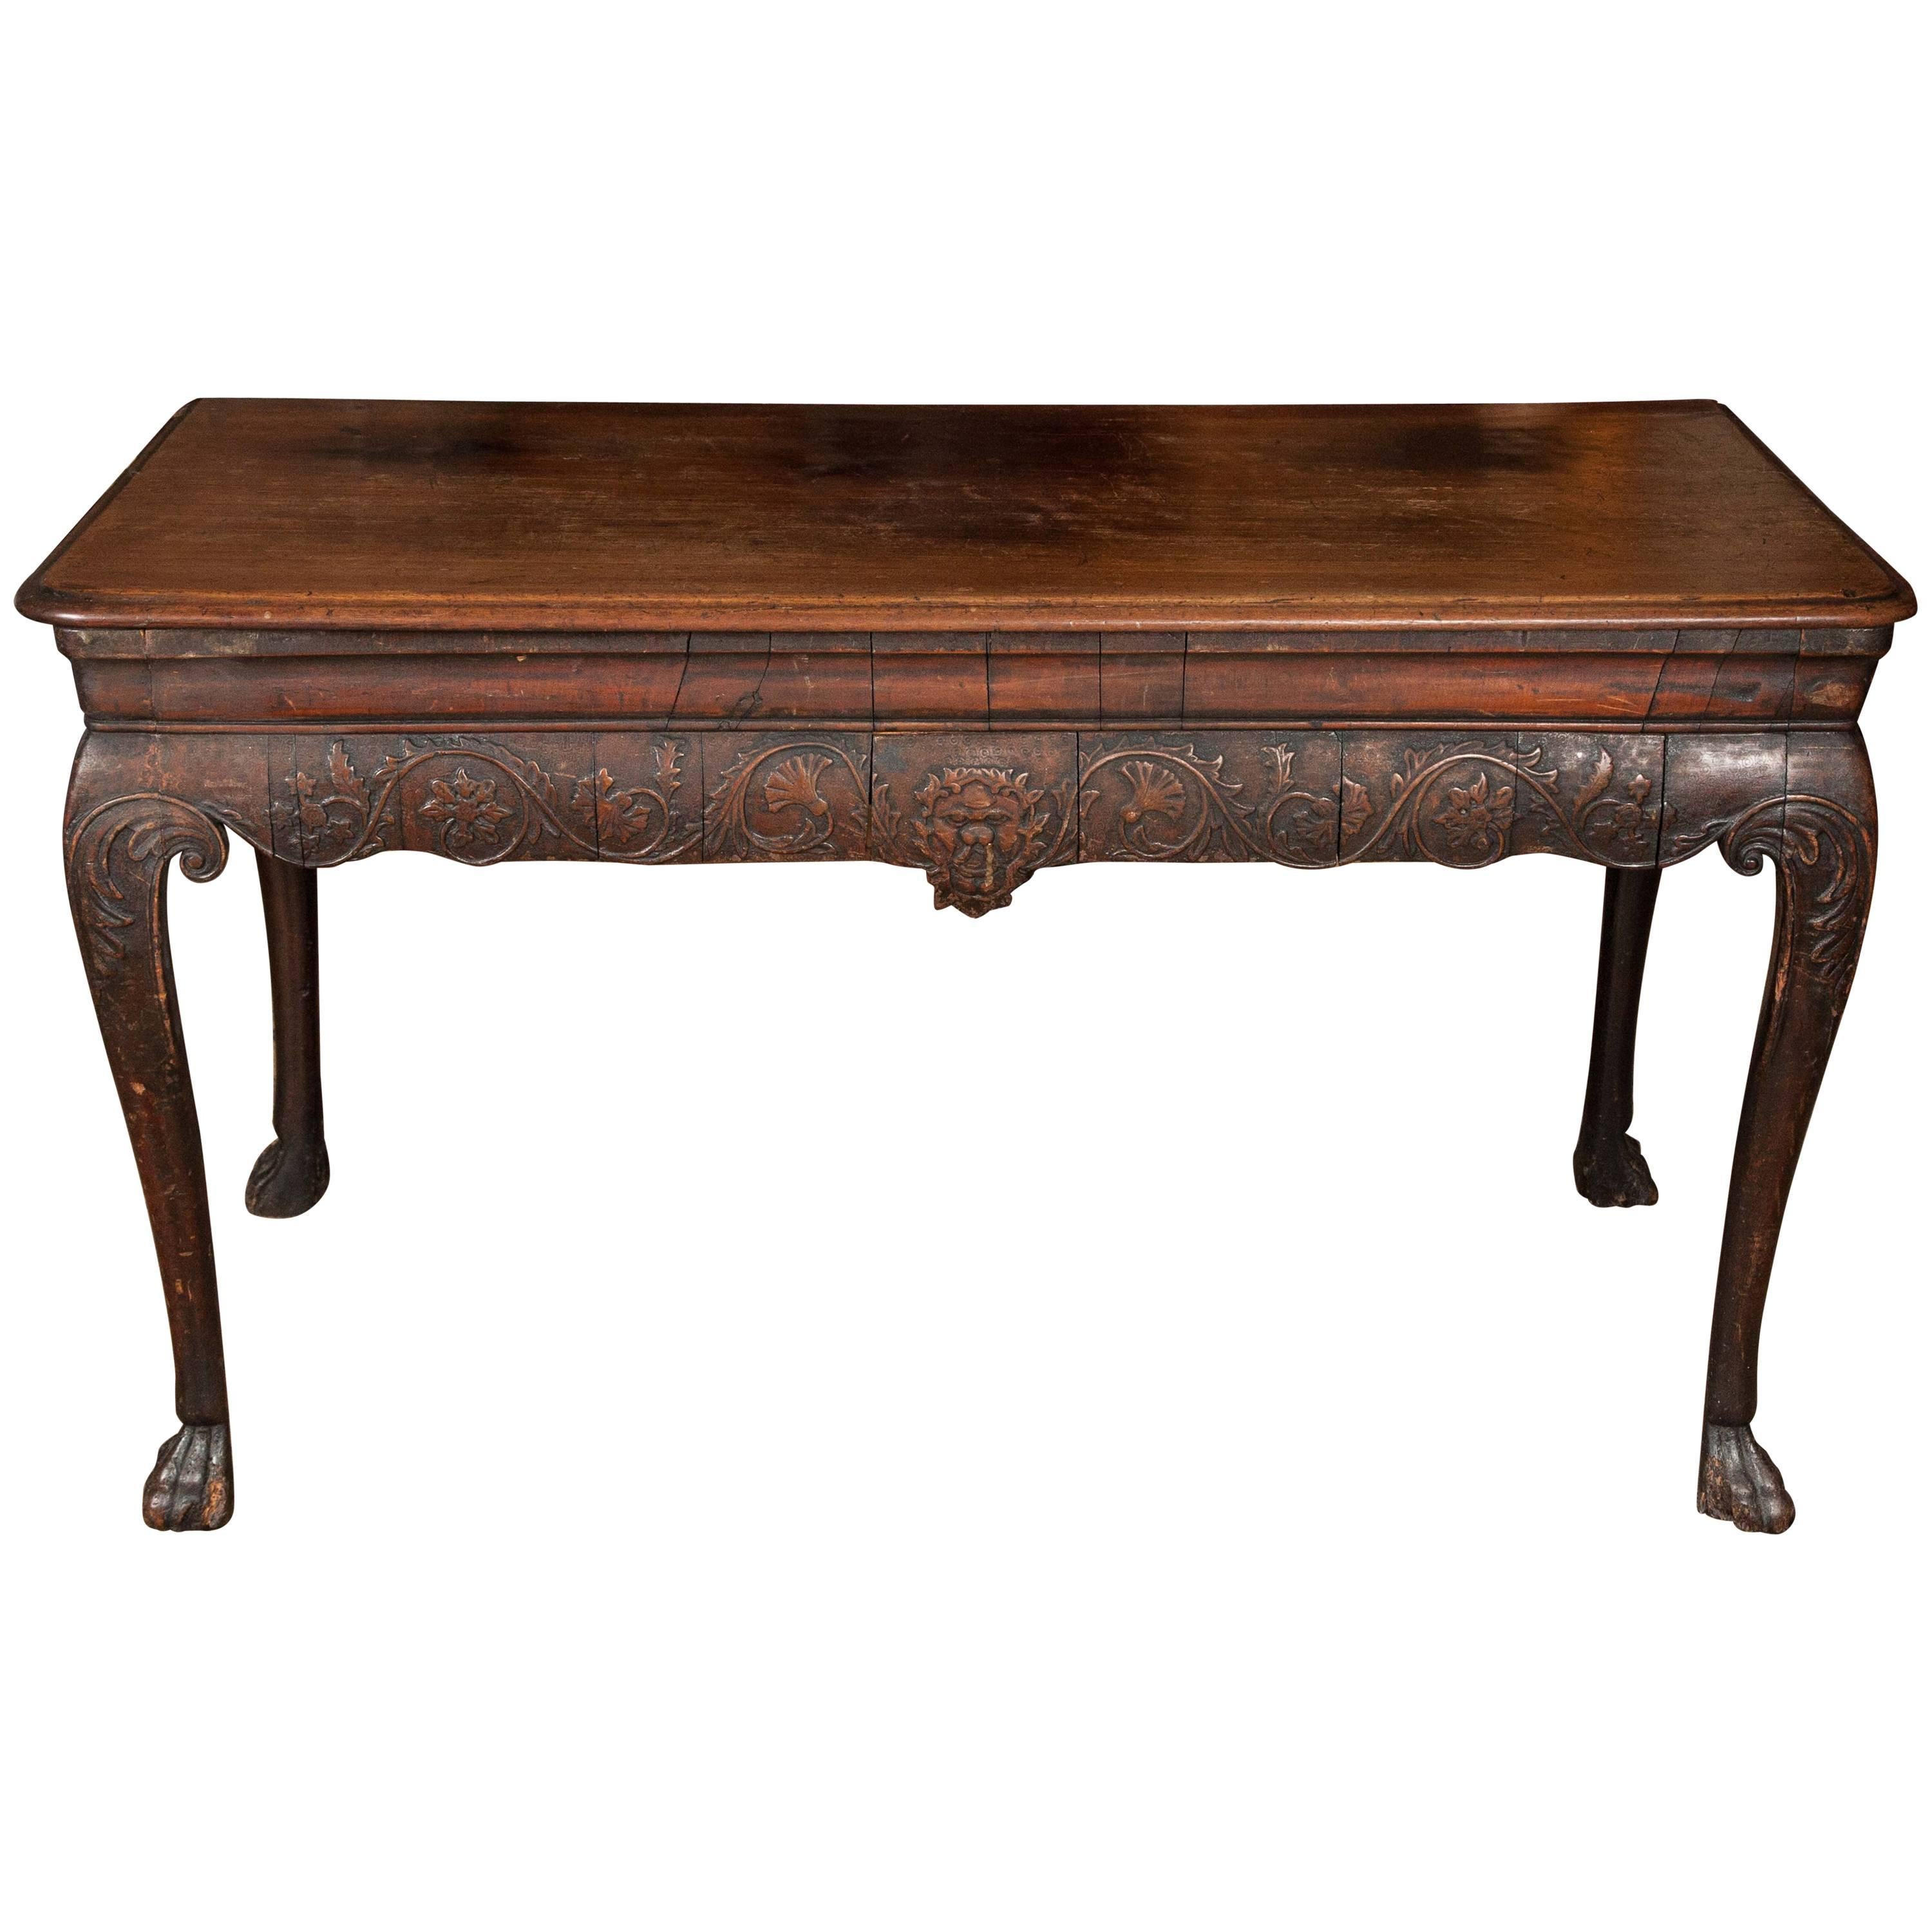 Superb and Very Rare Mid-18th Century Irish Walnut Side Table